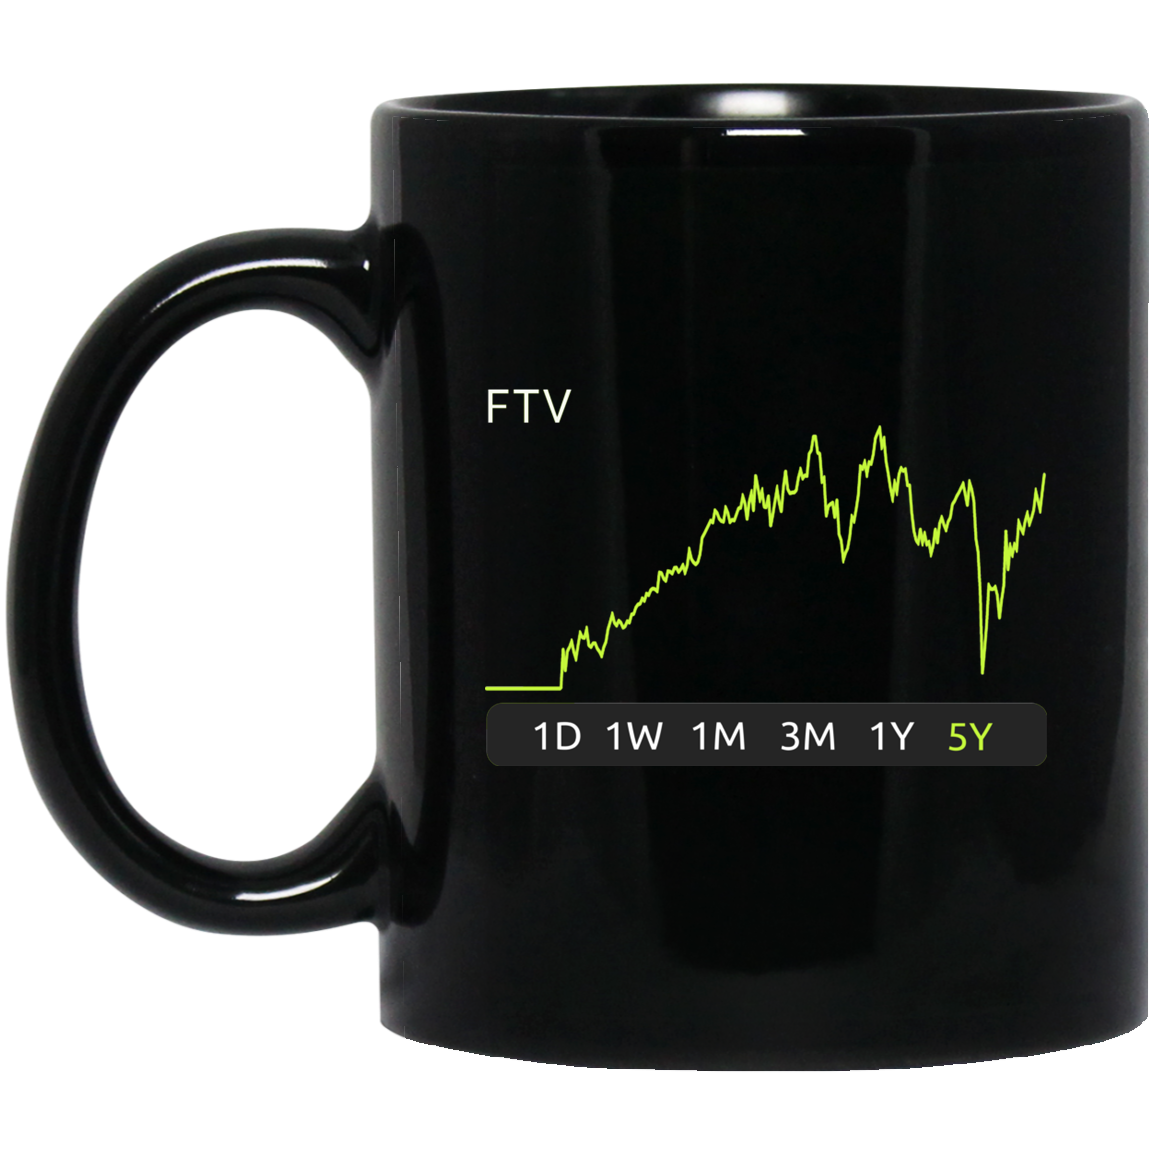 FTV Stock 5y Mug